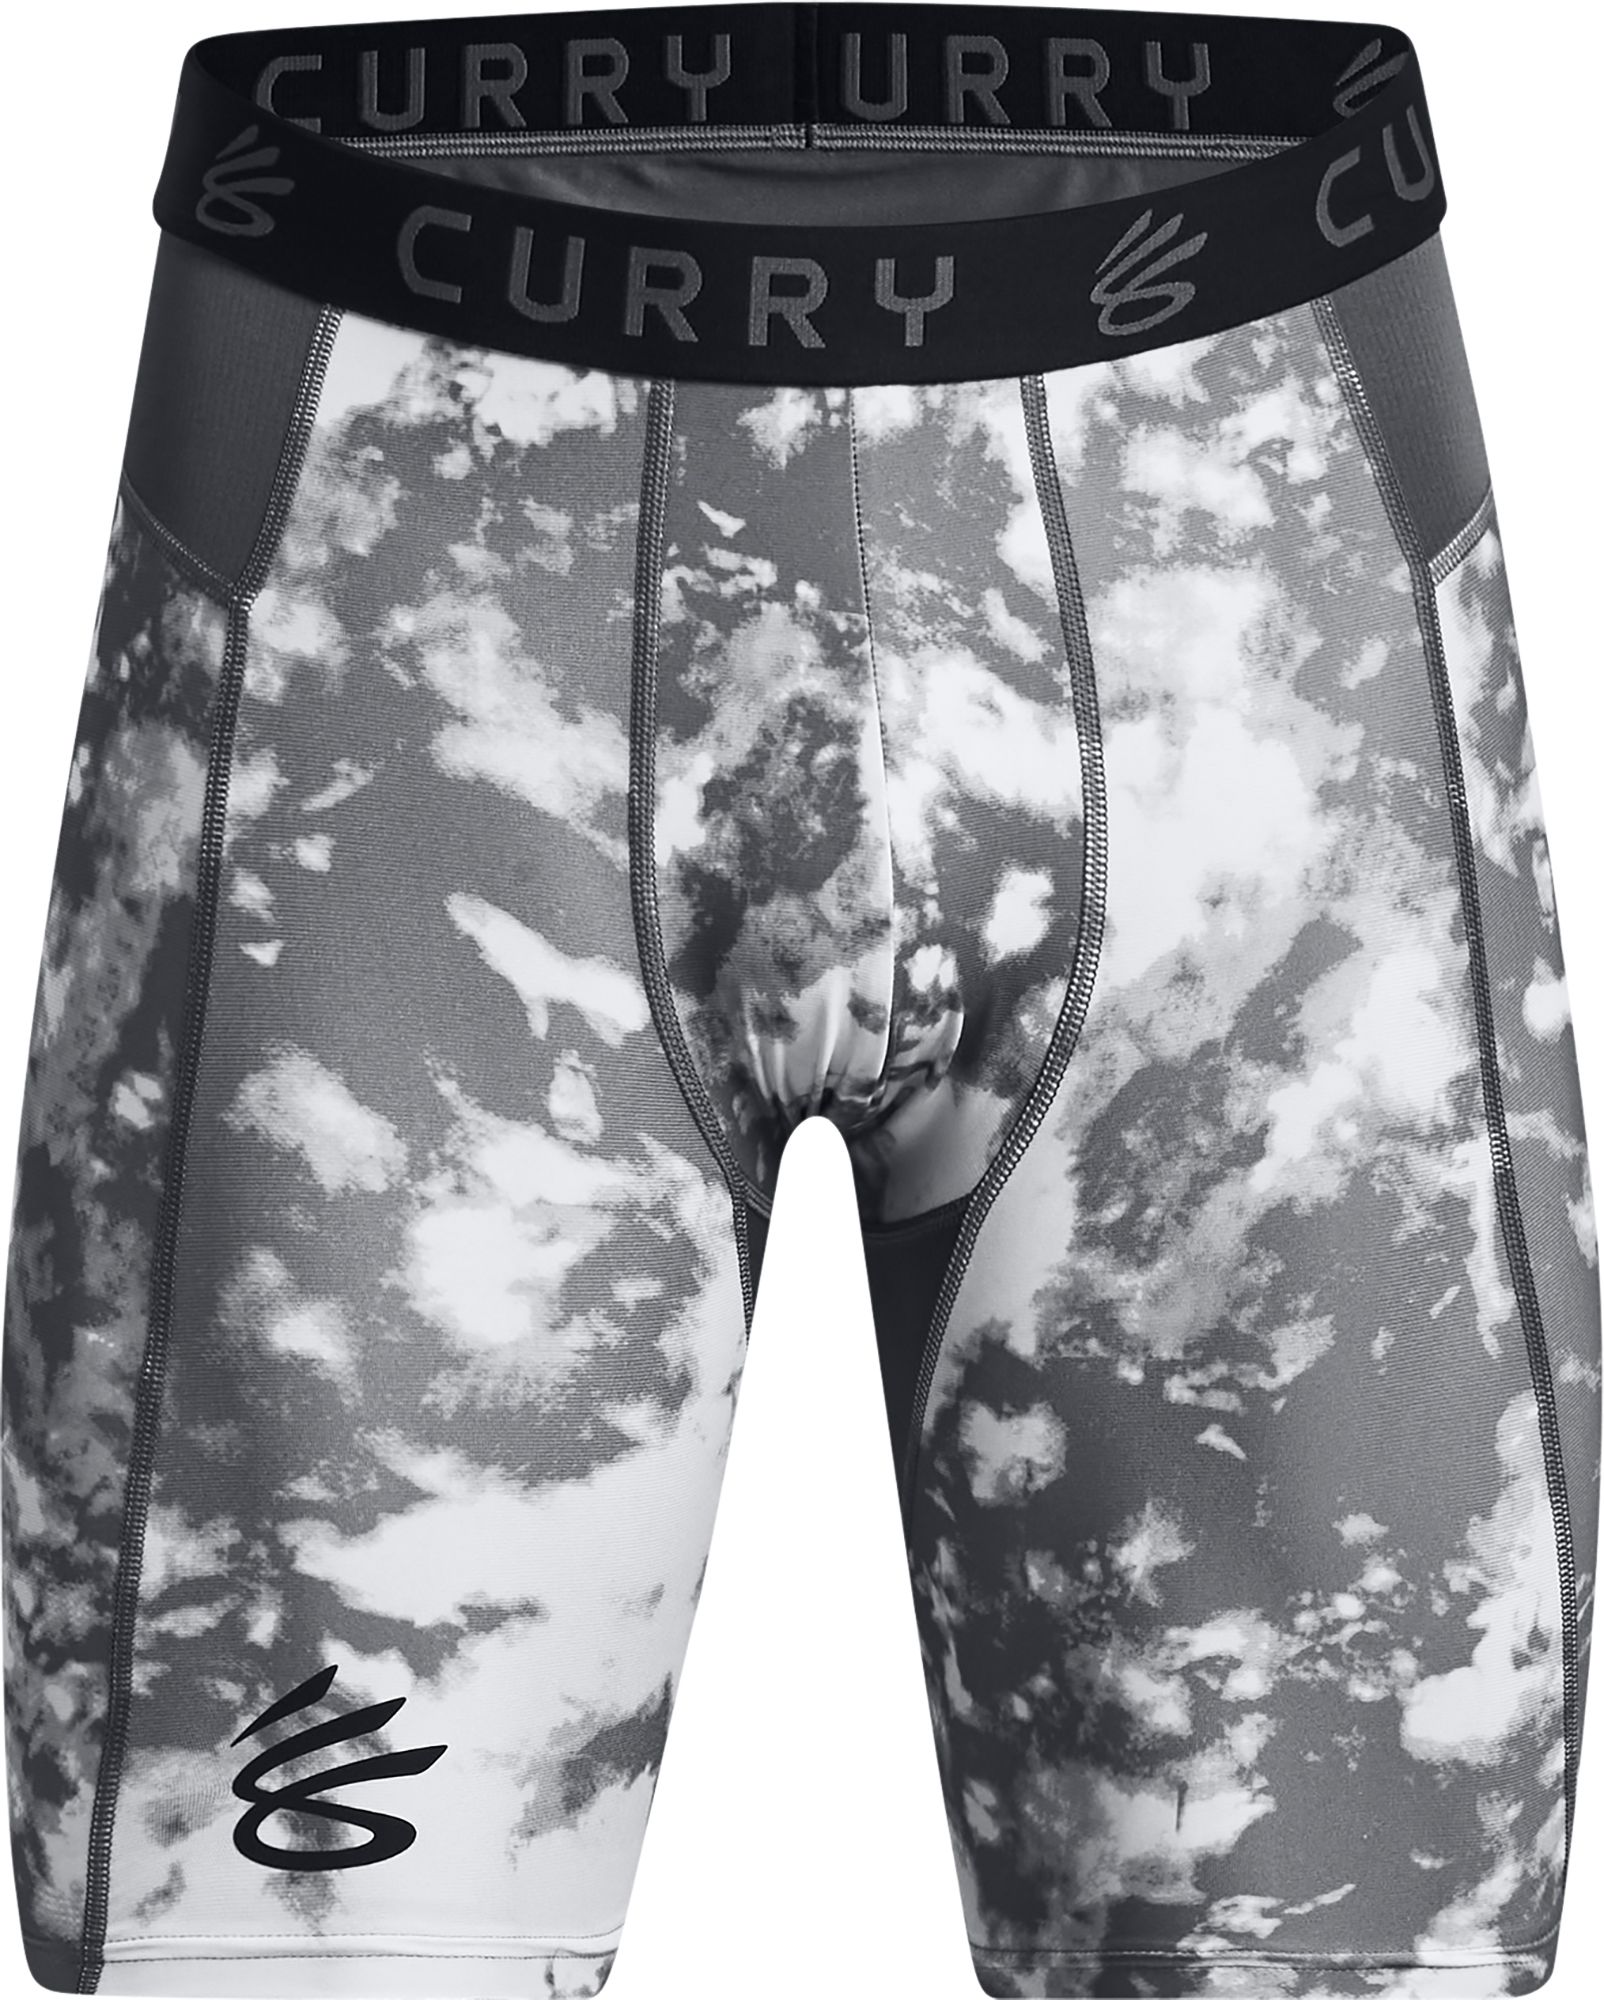 Under Armour Men's Curry HeatGear Compression Shorts